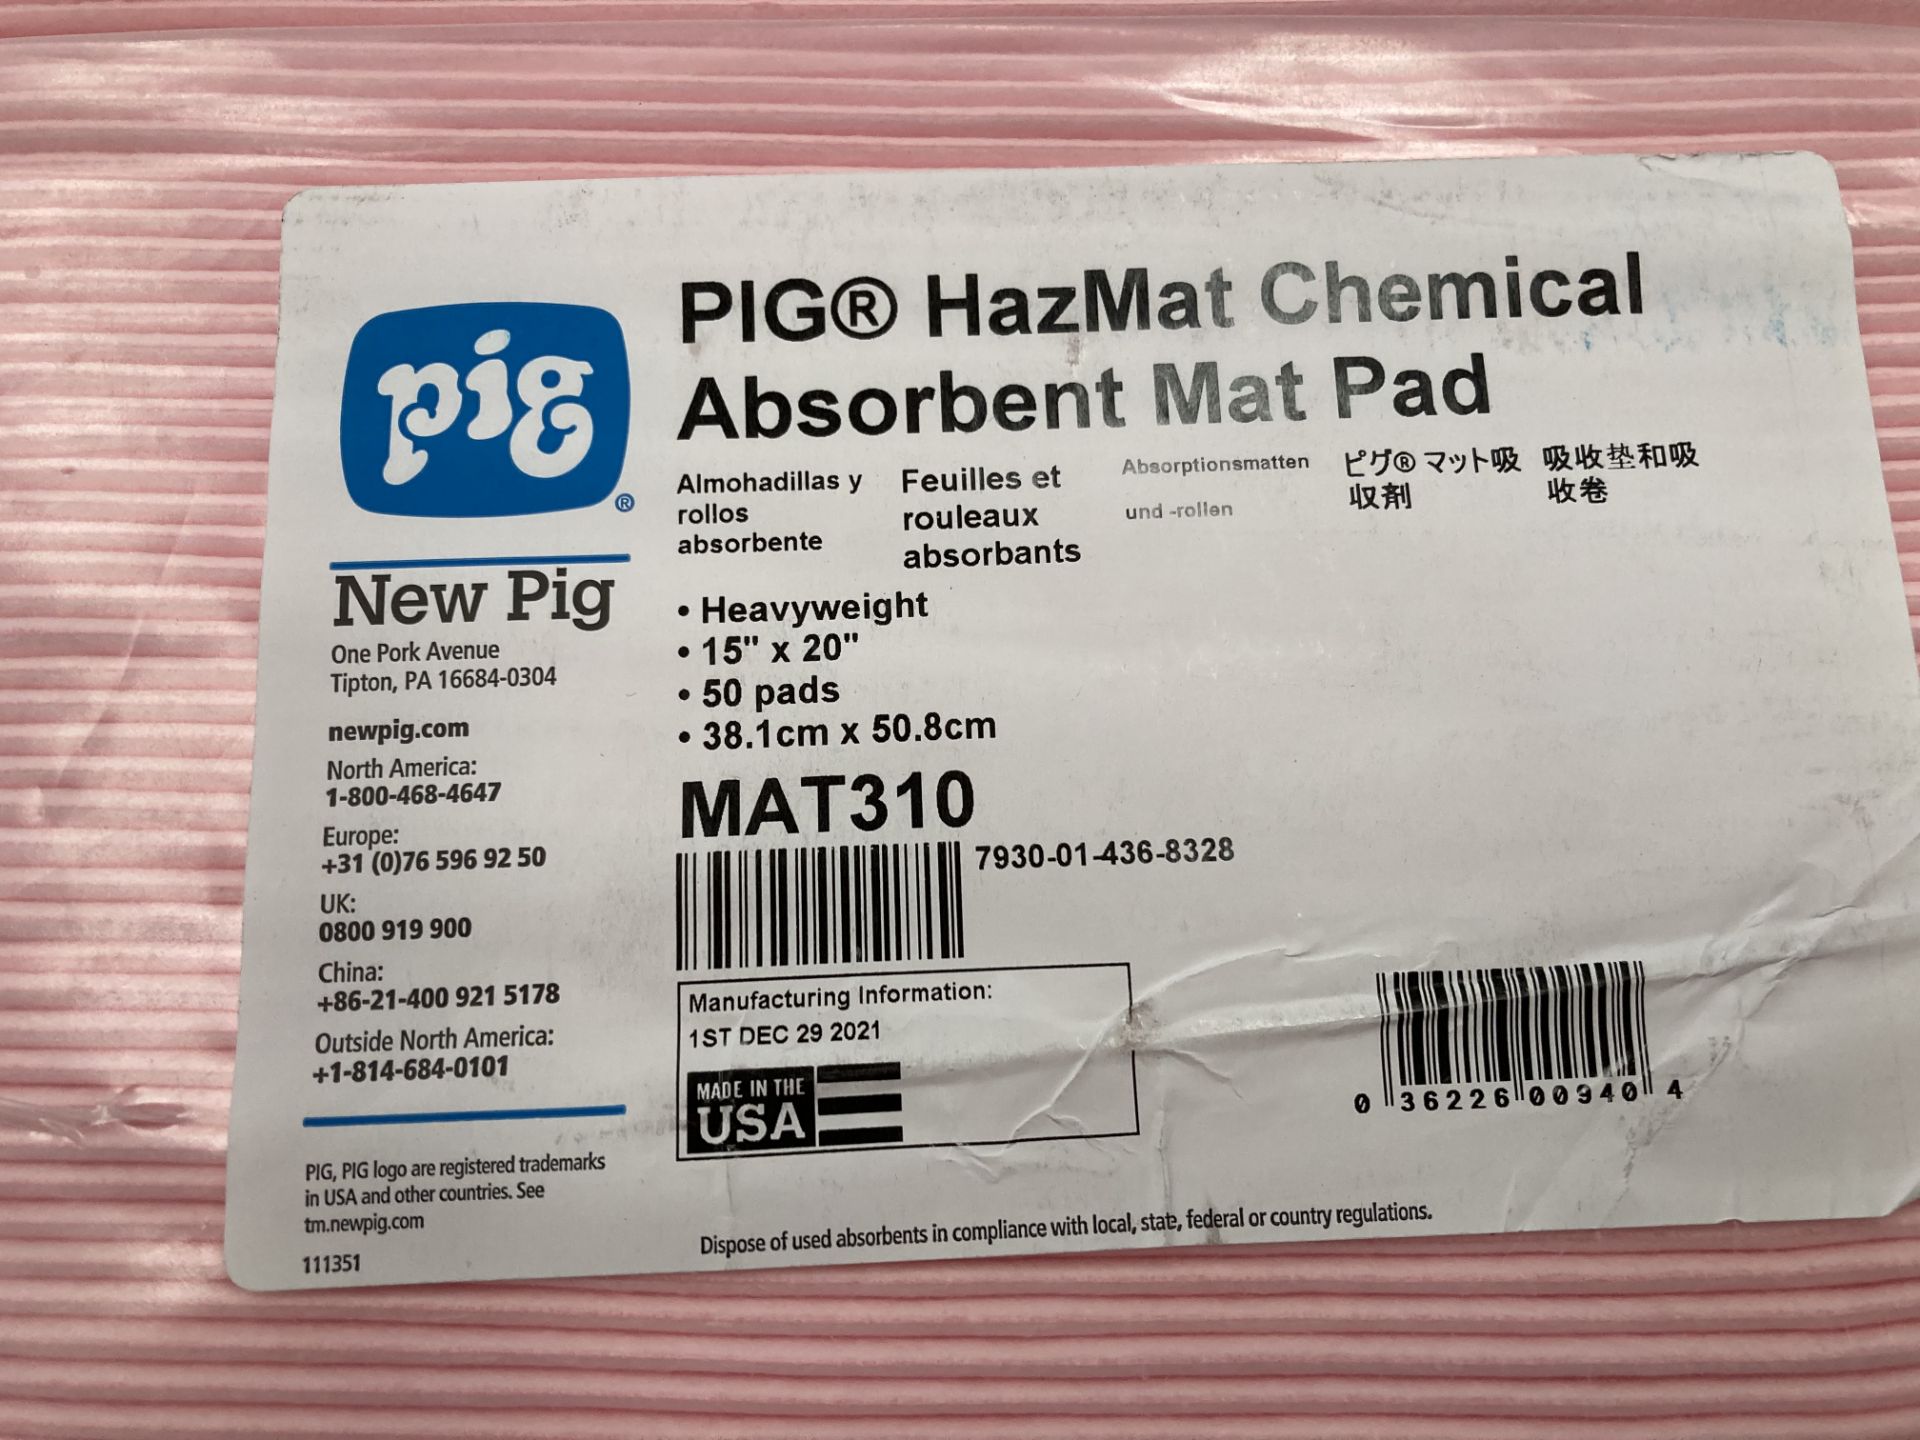 2 packs of 50 Pig Hazmat Chemical absorbent mat pads - 15" x 20" - Image 2 of 3